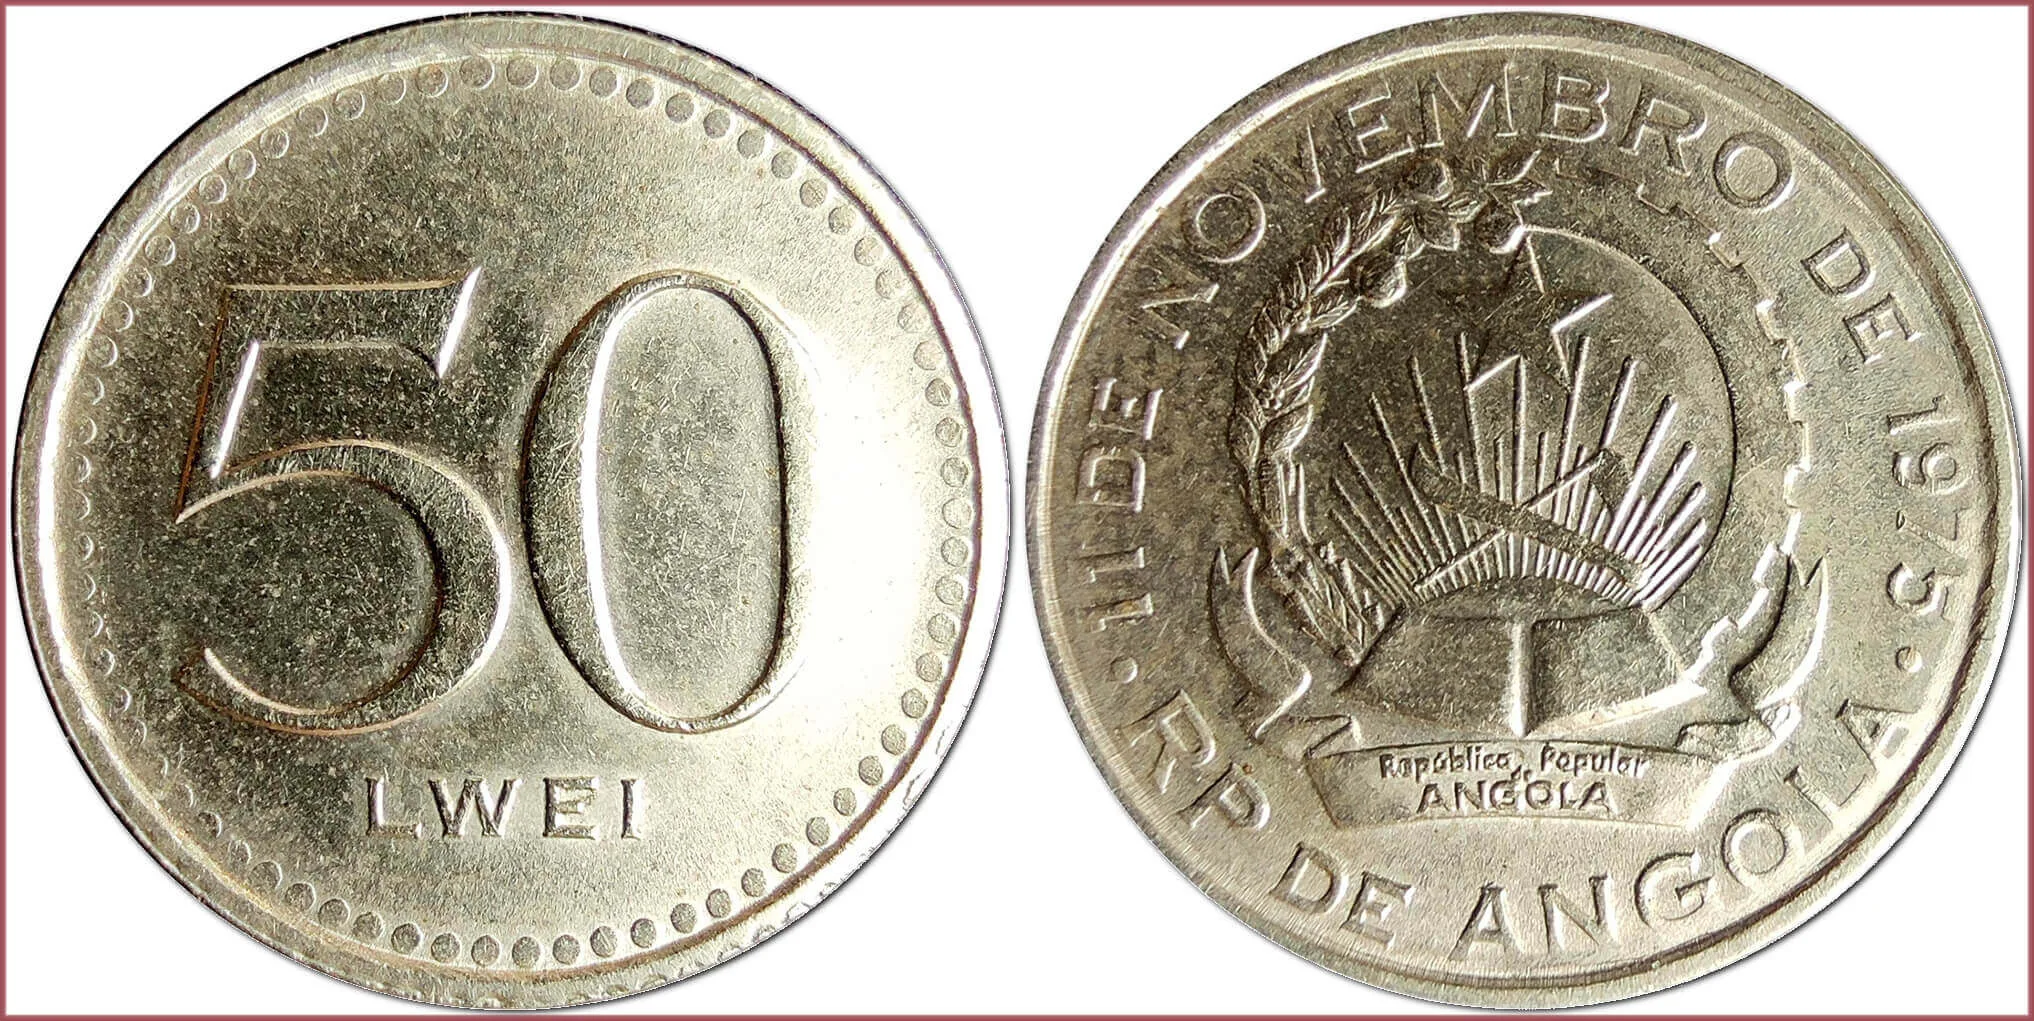 50 lwei, ND (1977): People's Republic of Angola